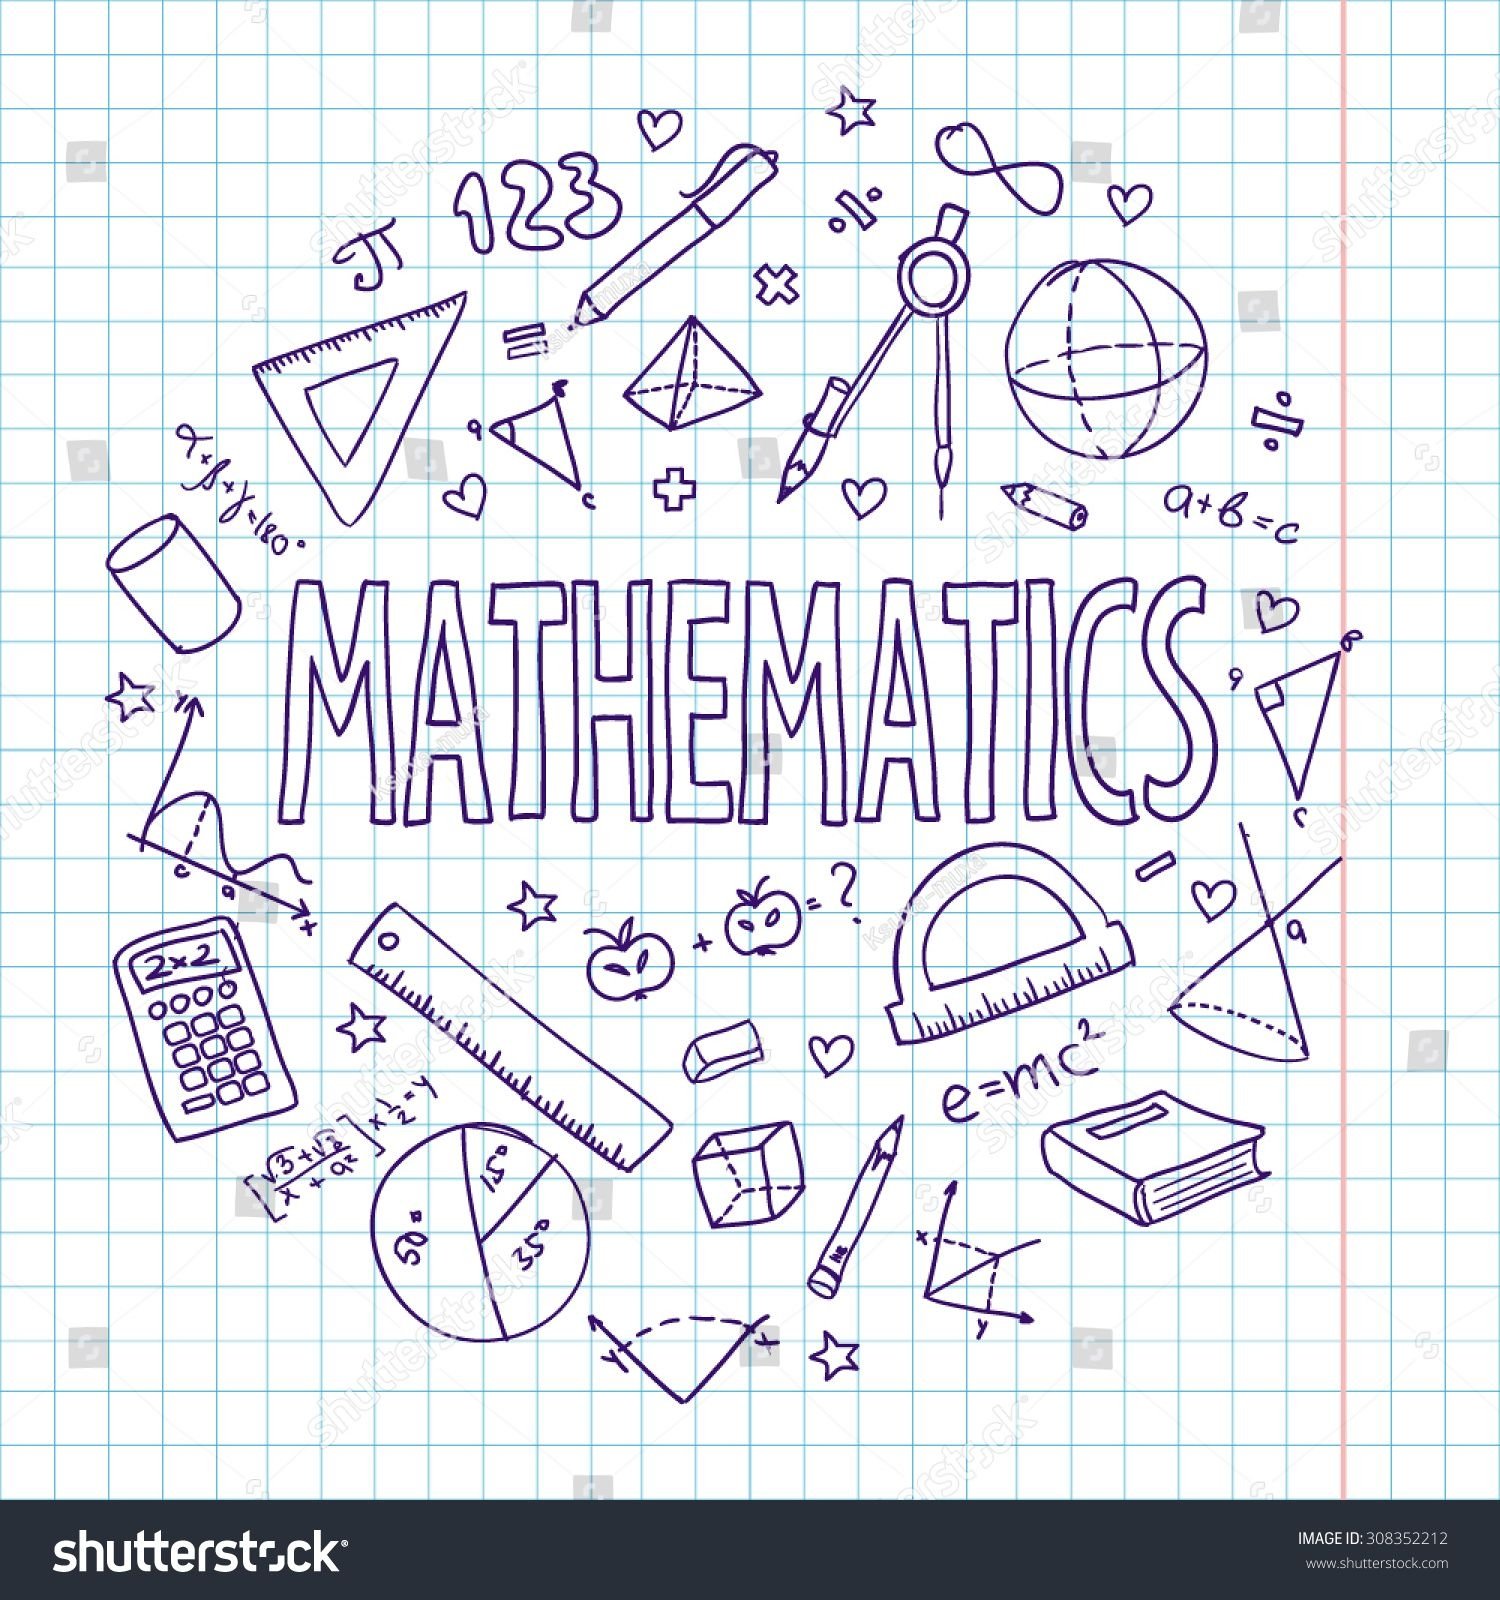 Рисунки на тетрадь по математике. Математические рисунки. Рисунок на тему математика. Рисунки мтиматики. Рисунки в школьных тетрадях.